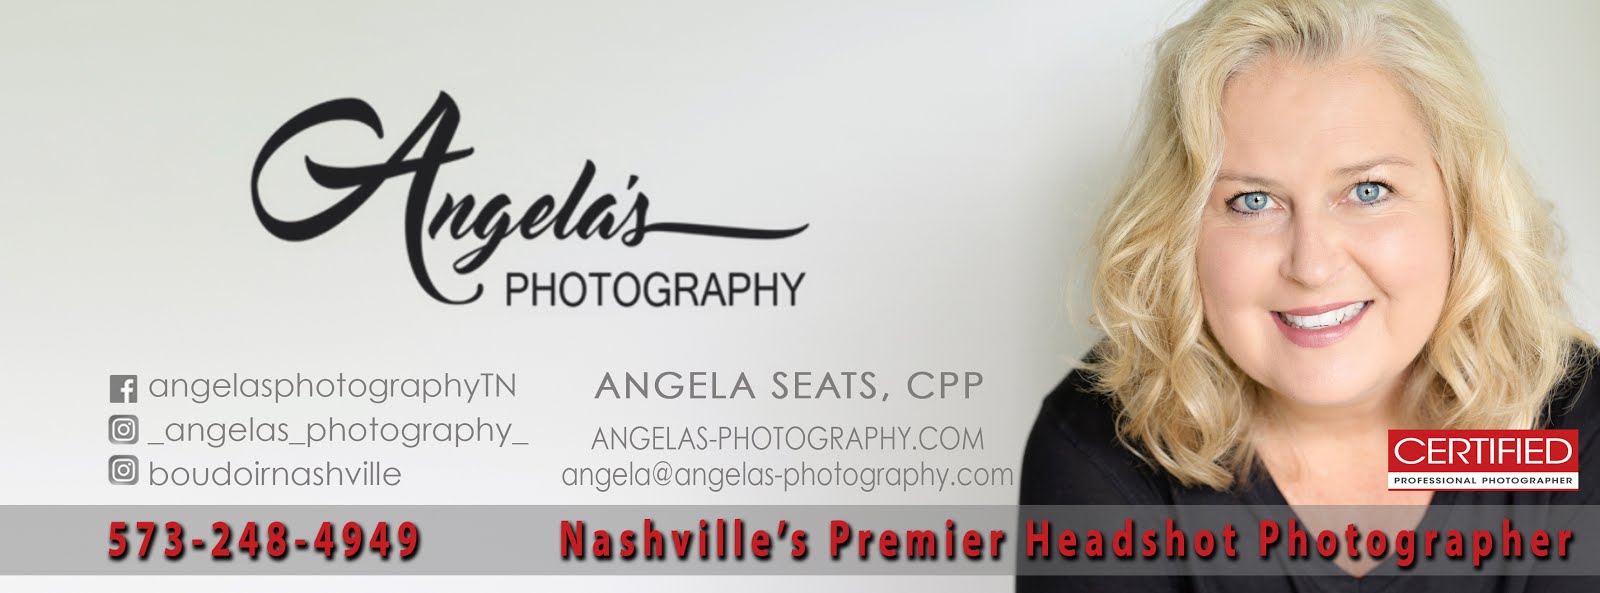 Angela's Photography 